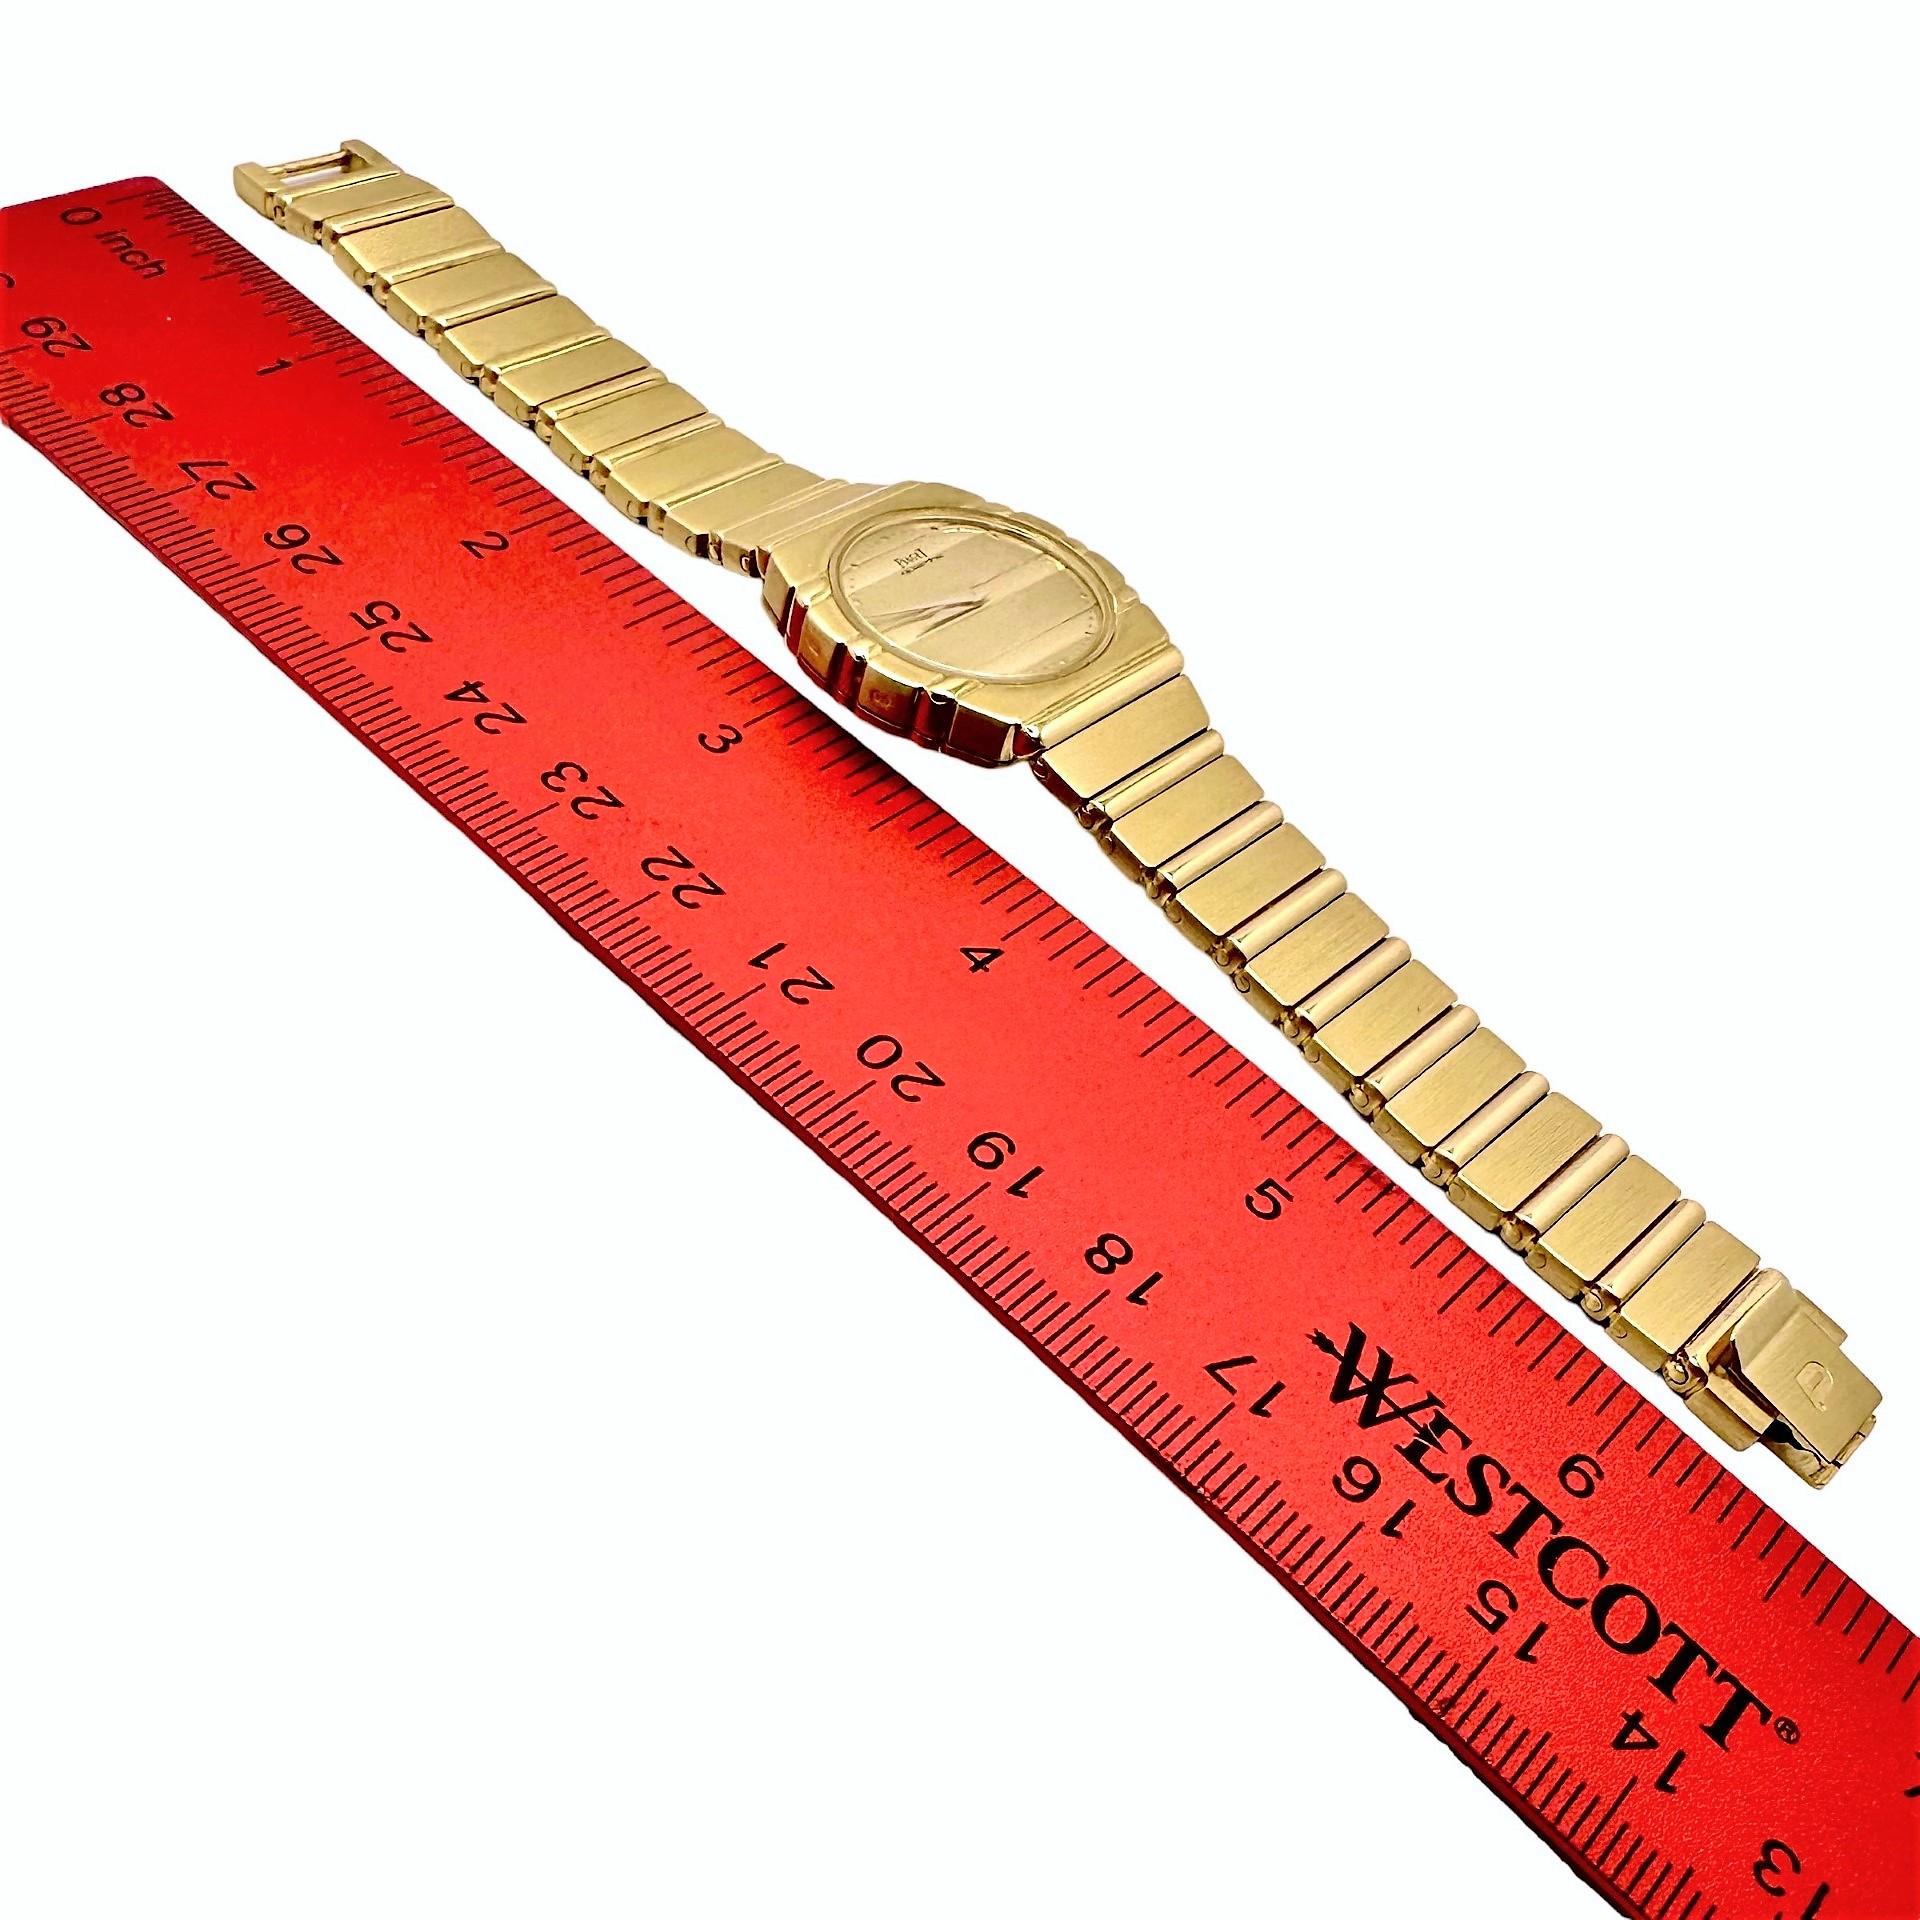 Women's or Men's Classic Mid-size Piaget Polo Wrist Watch with Piaget Original Quartz Movement